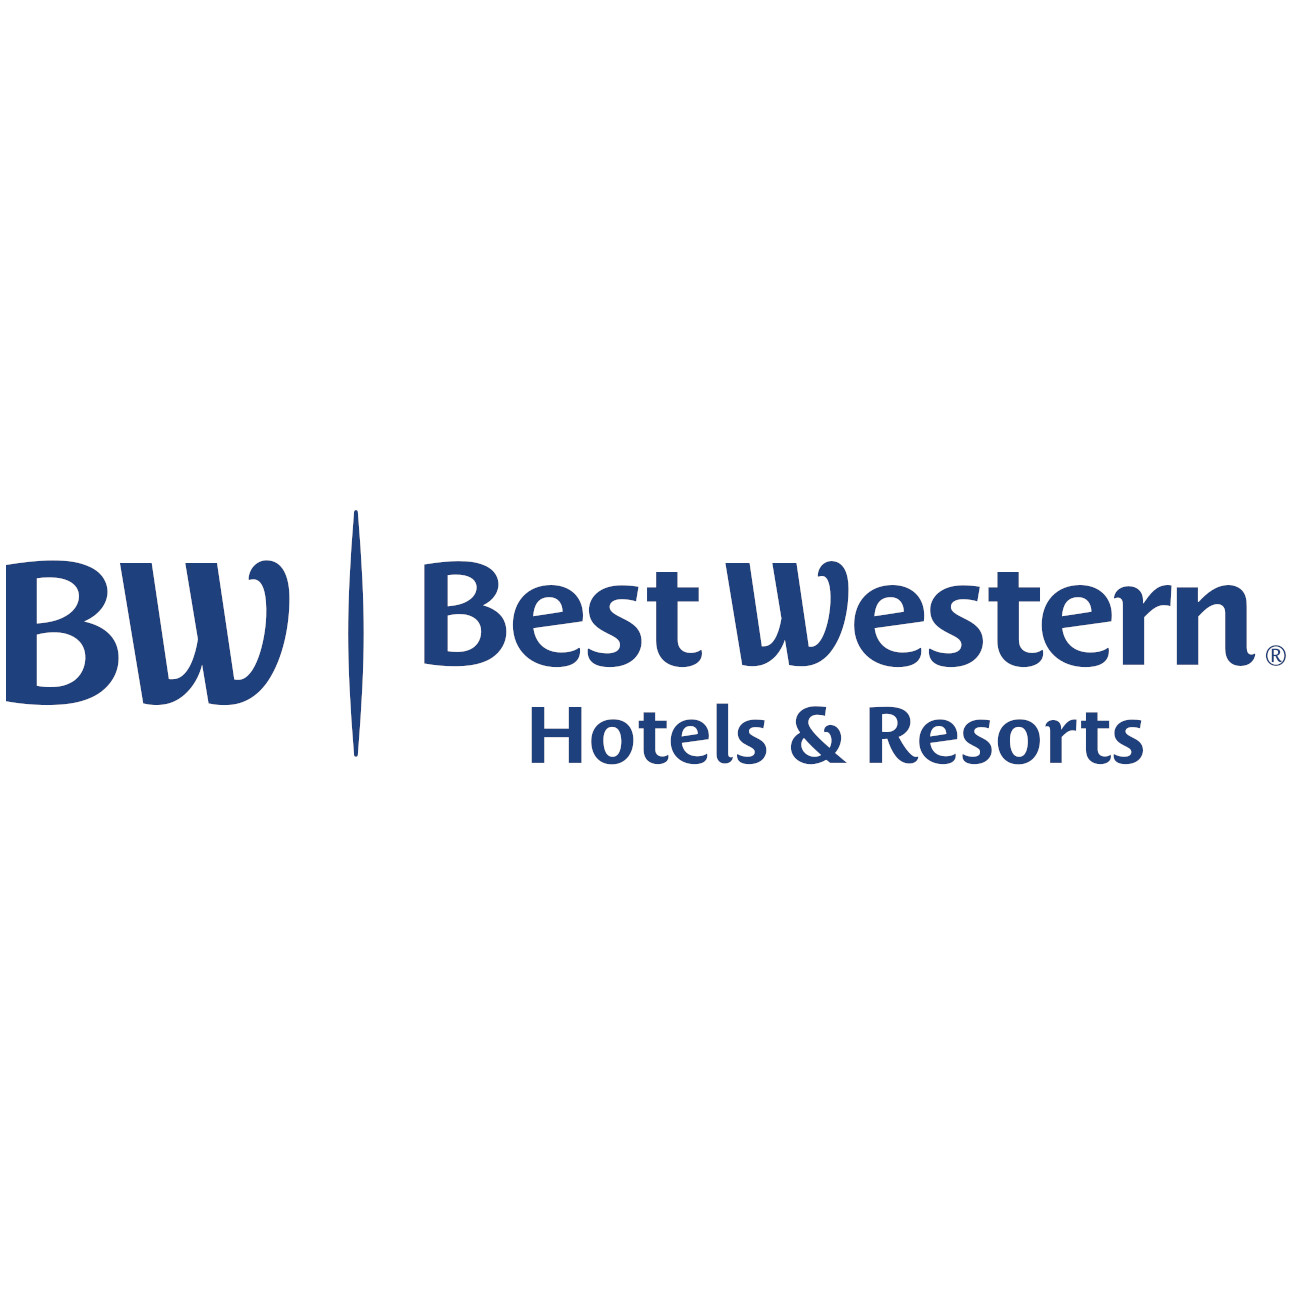 Best Western Hotels & Resorts Logo1x1png